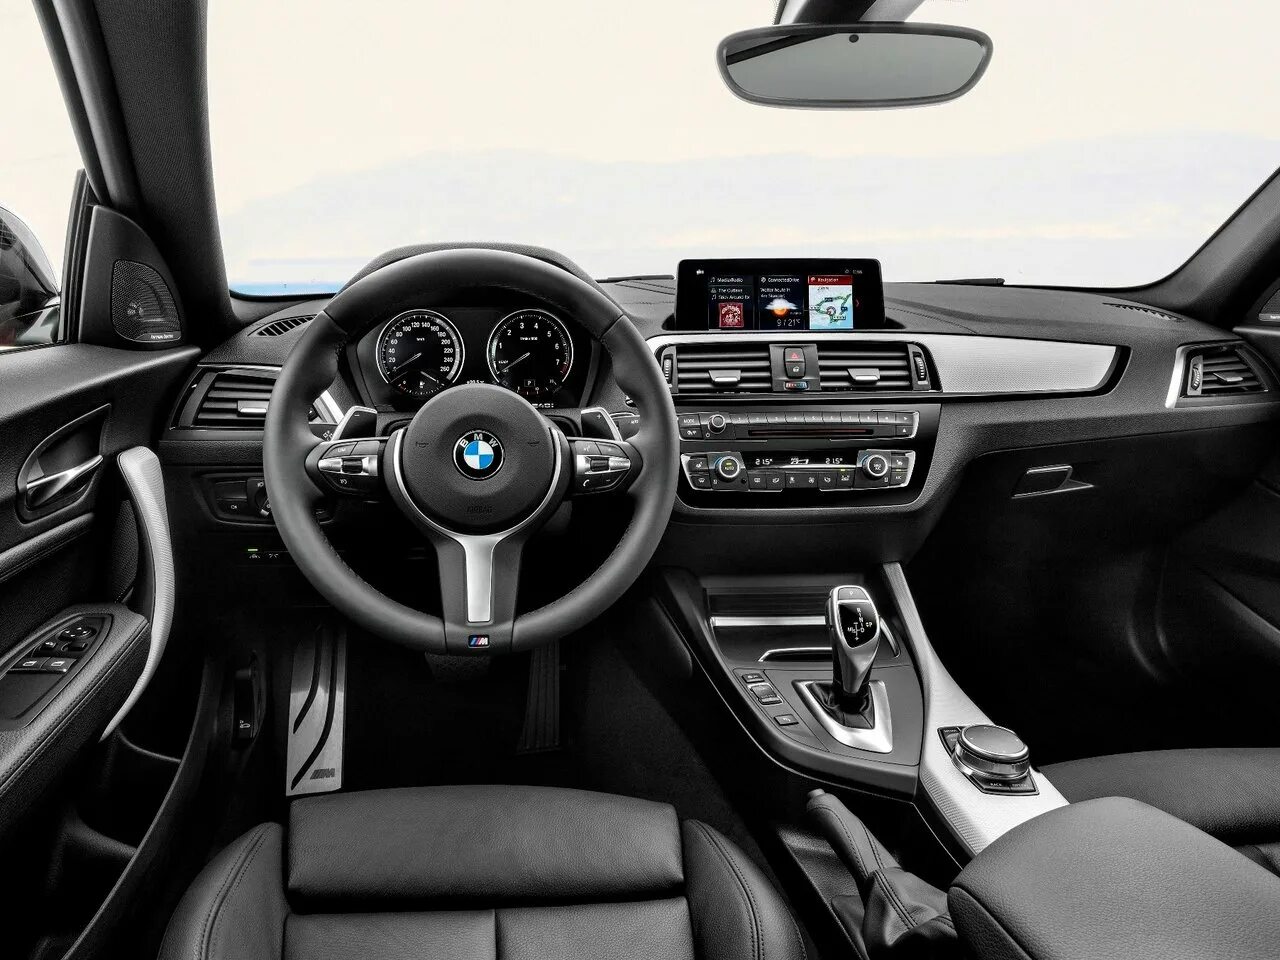 1 2017 года. BMW m140i XDRIVE. BMW f20 Interior. БМВ м140i XDRIVE 2017. BMW m240i салон.